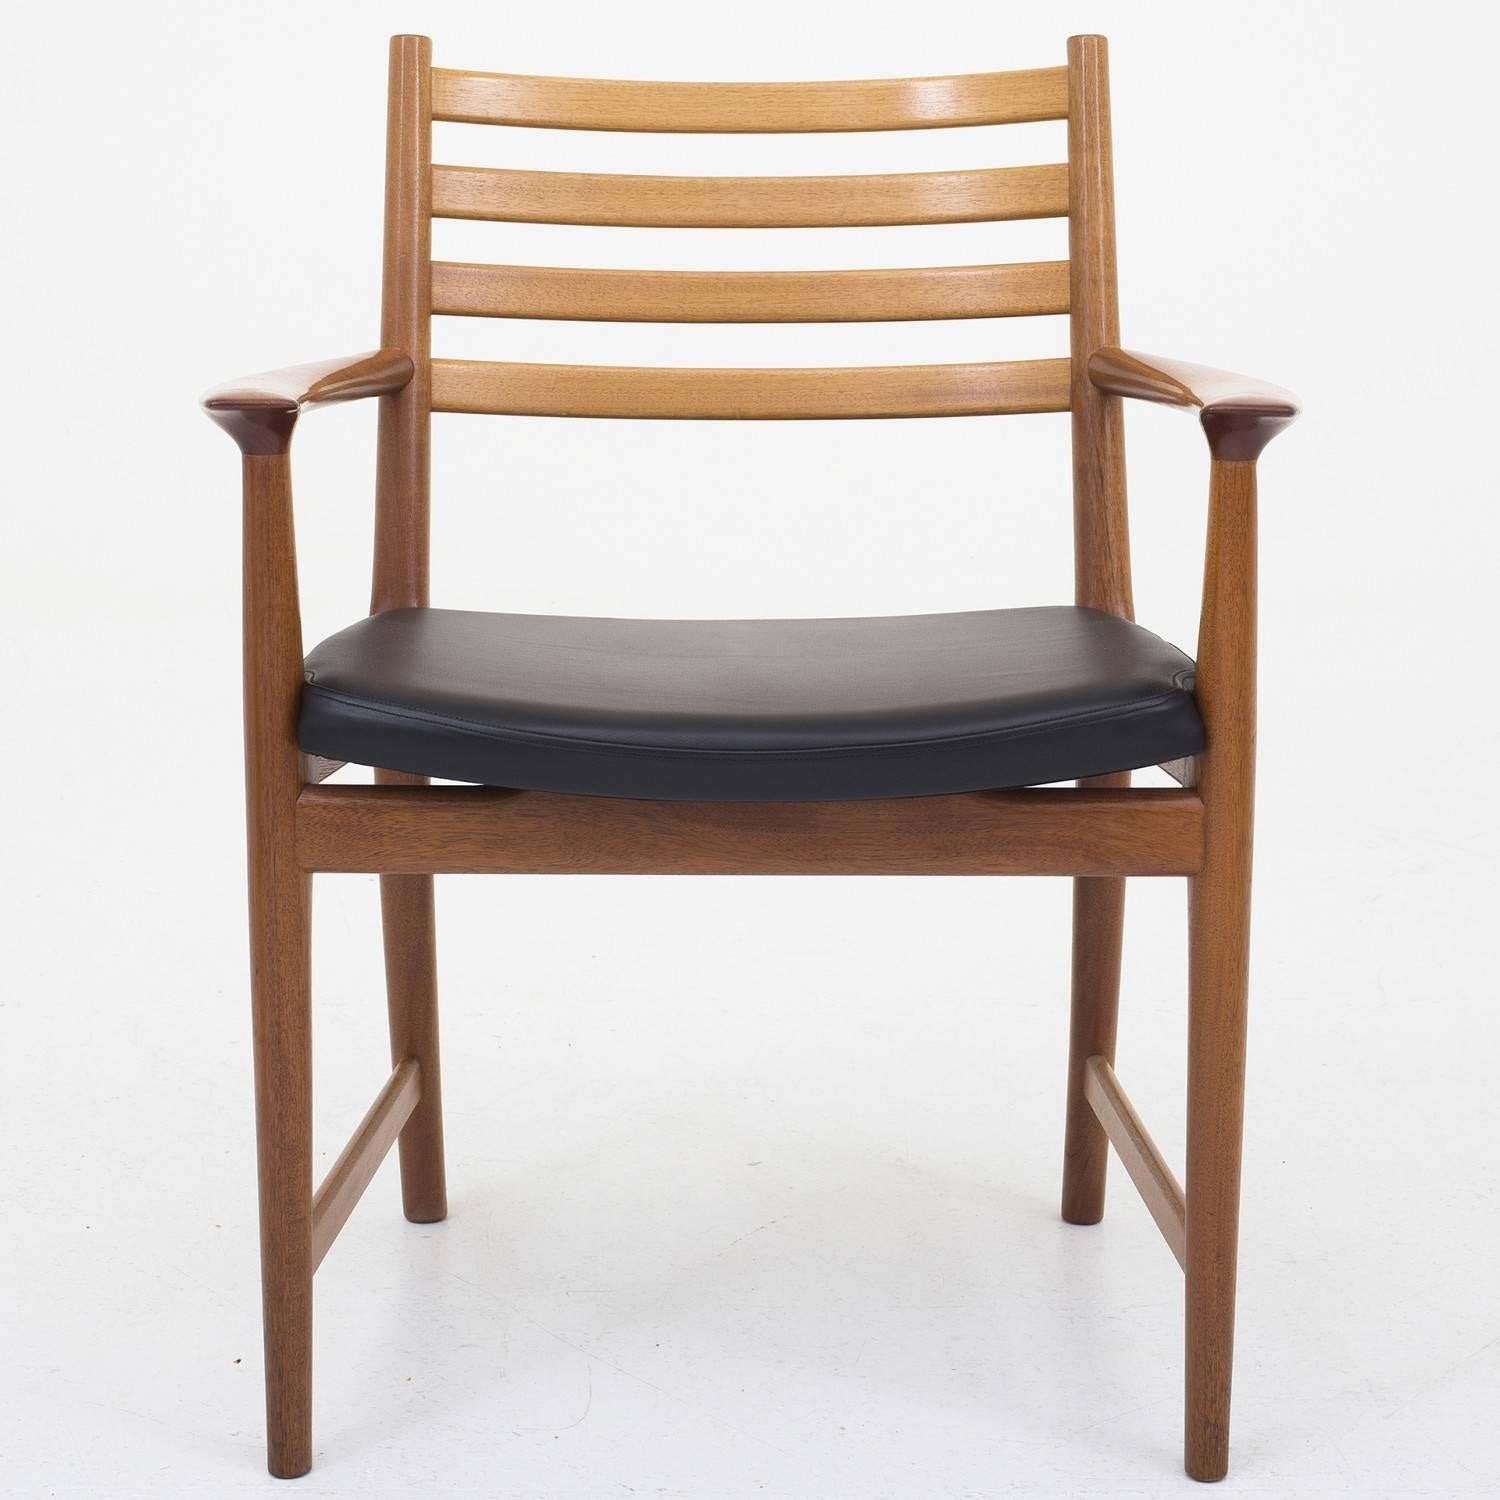 Set of six armchairs in mahogany and black leather, model 504. Designed by Kai Lyngfeldt Larsen. Maker Søborg Møbelfabrik.